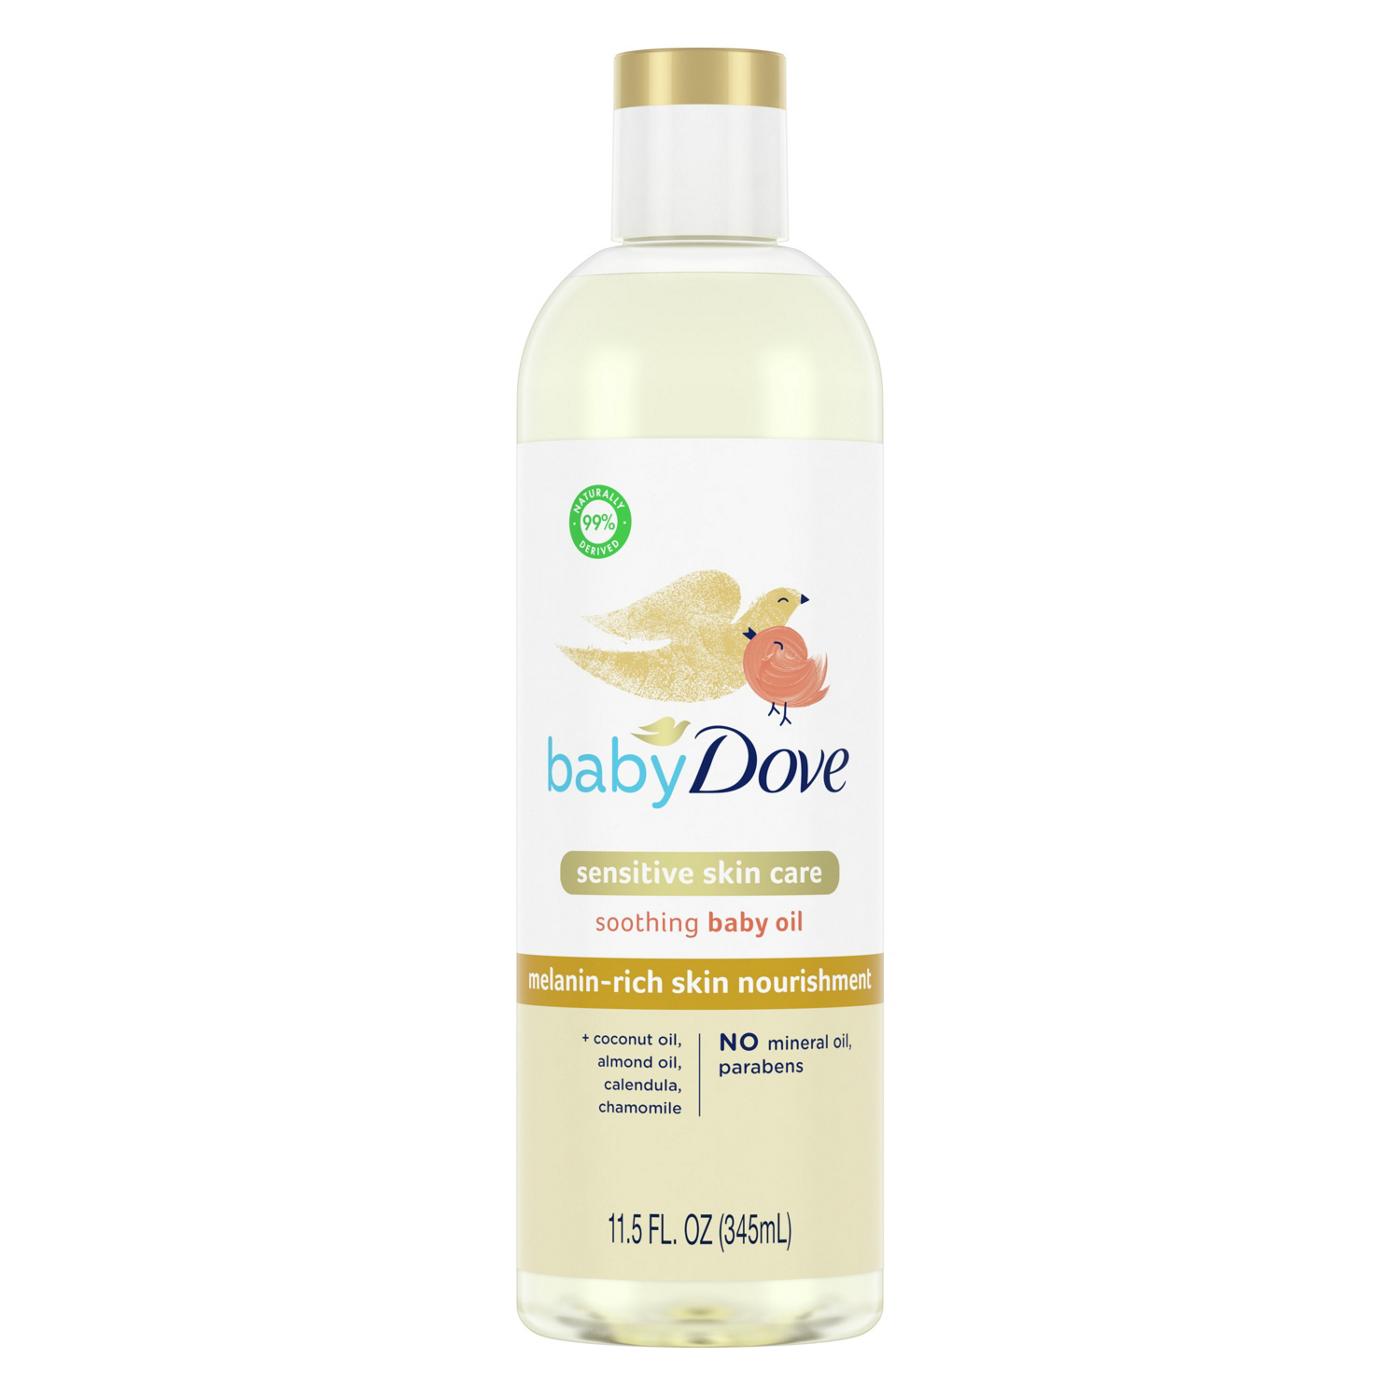 Baby Dove Melanin-Rich Skin Nourishment Baby Oil; image 1 of 6